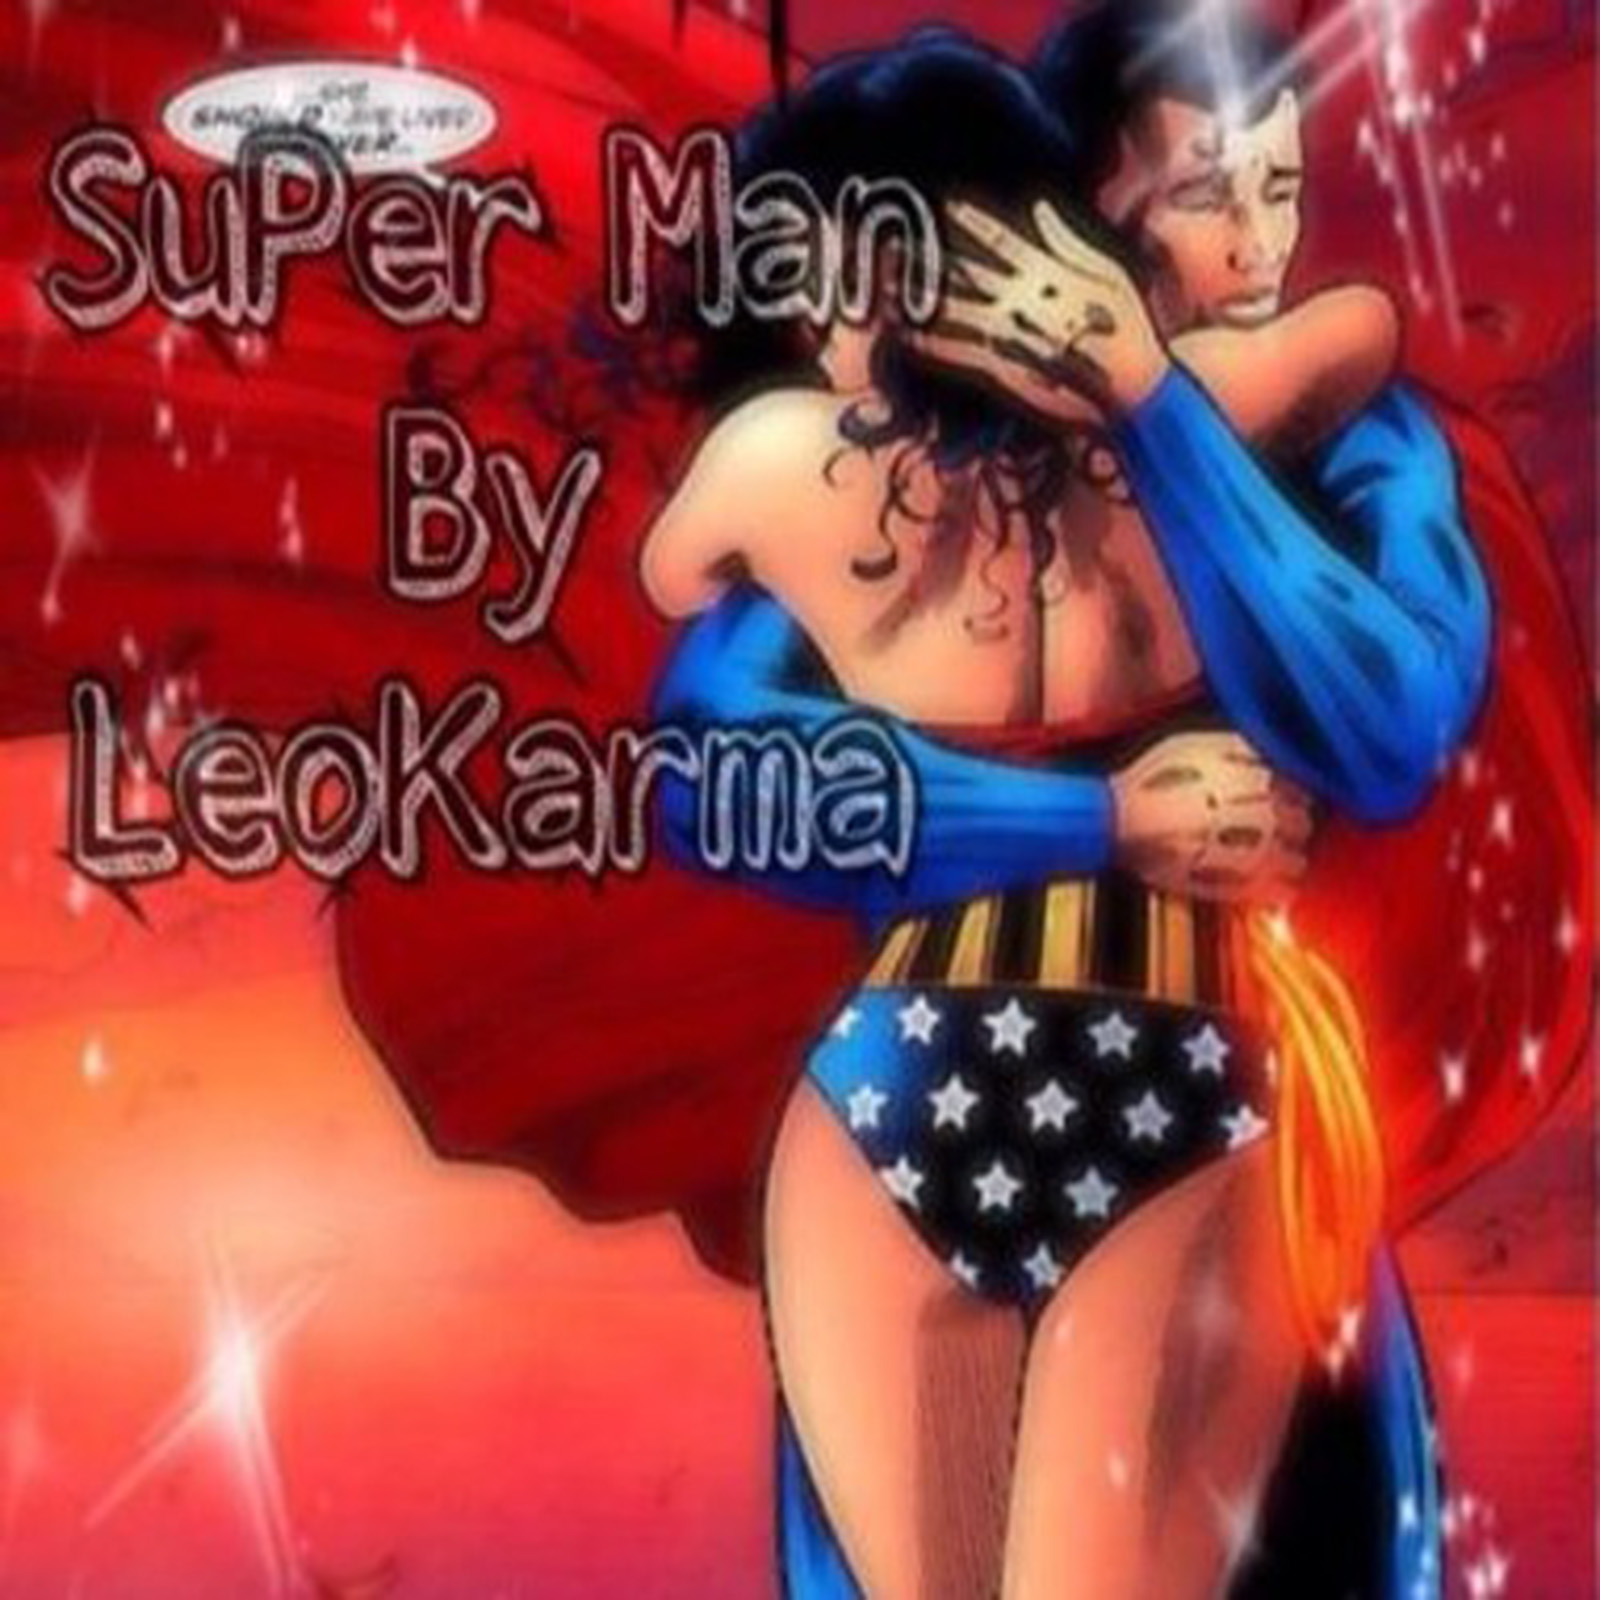 Superman by Leo Karma